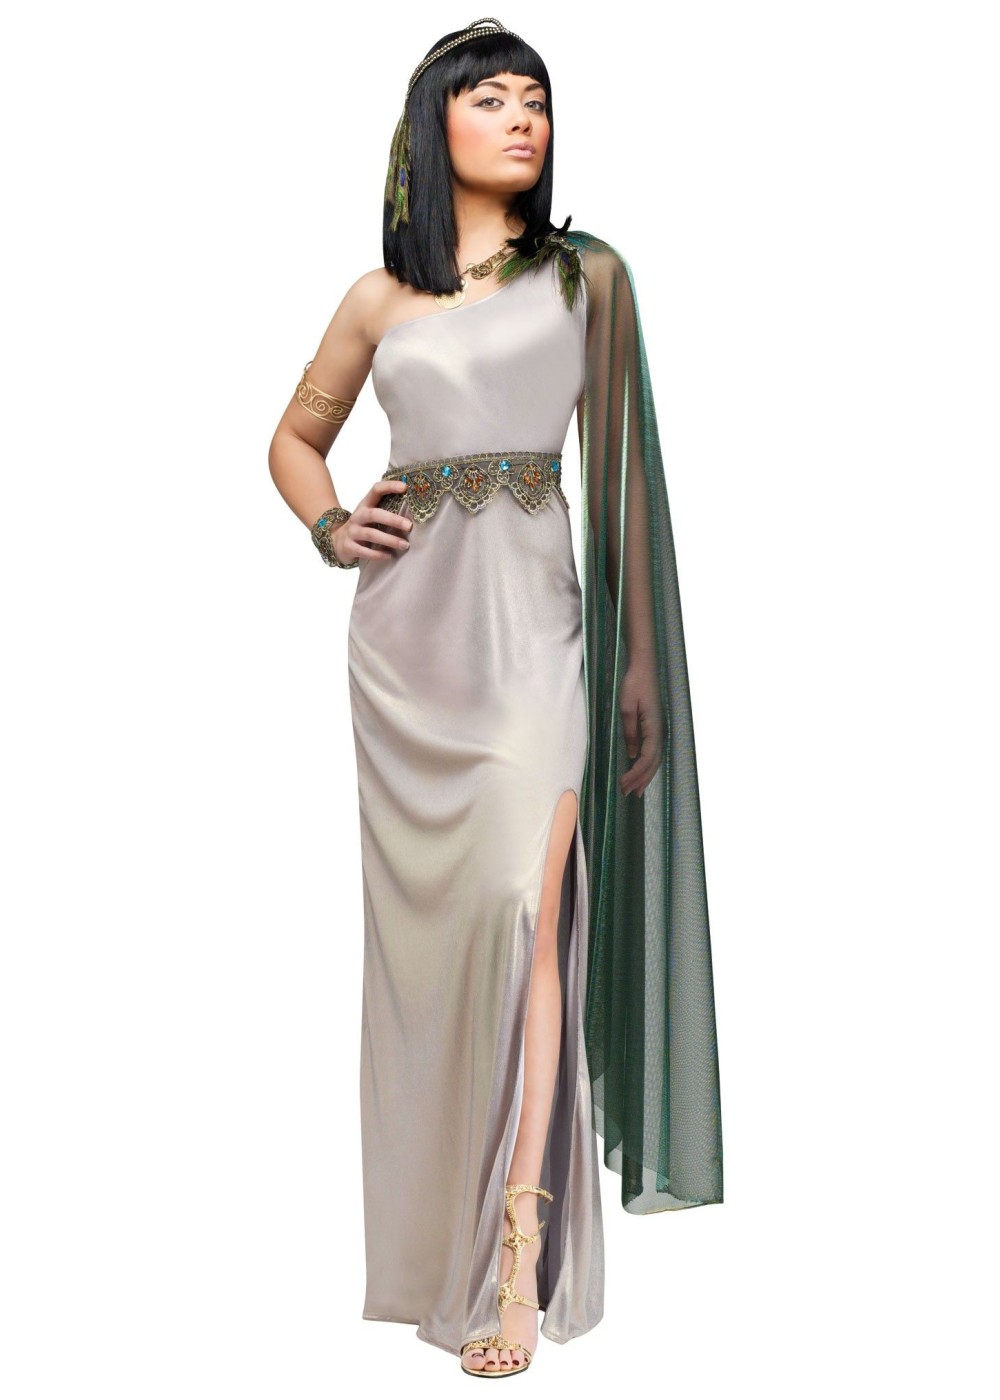  Jewel Nile Cleopatra Costume